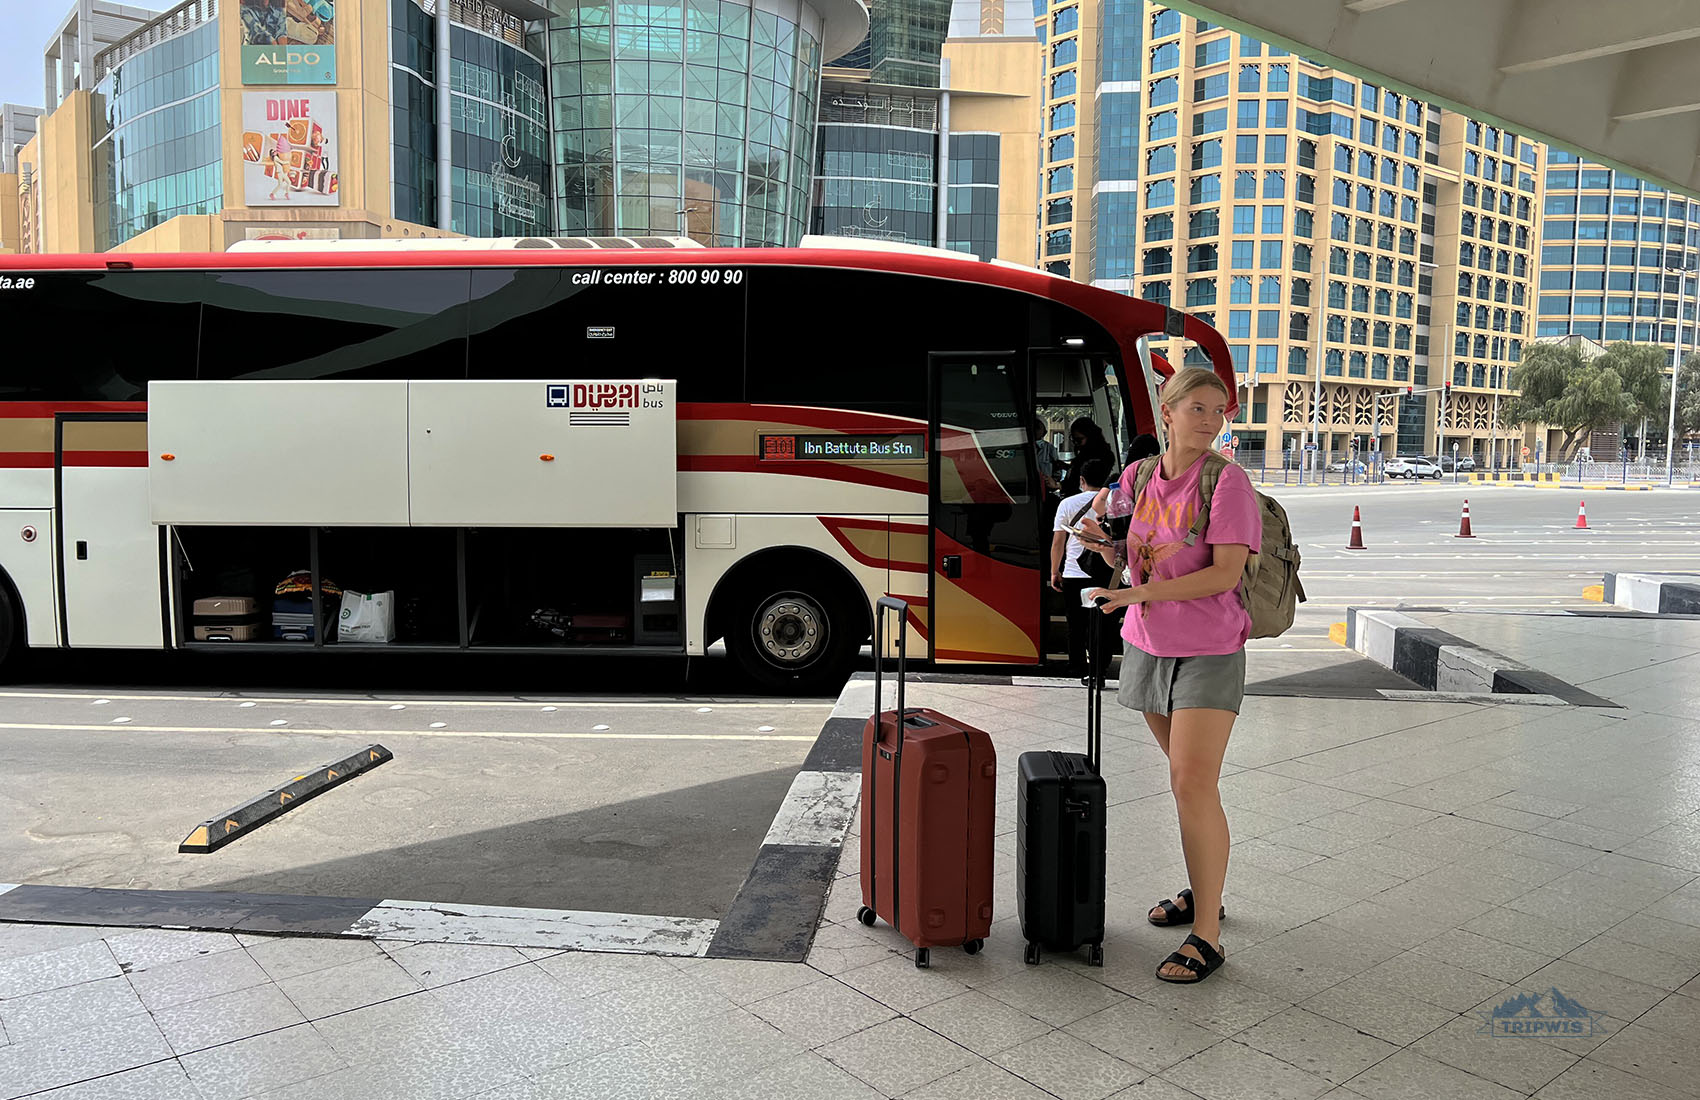 Bus From Abu-Dhabi to Dubai